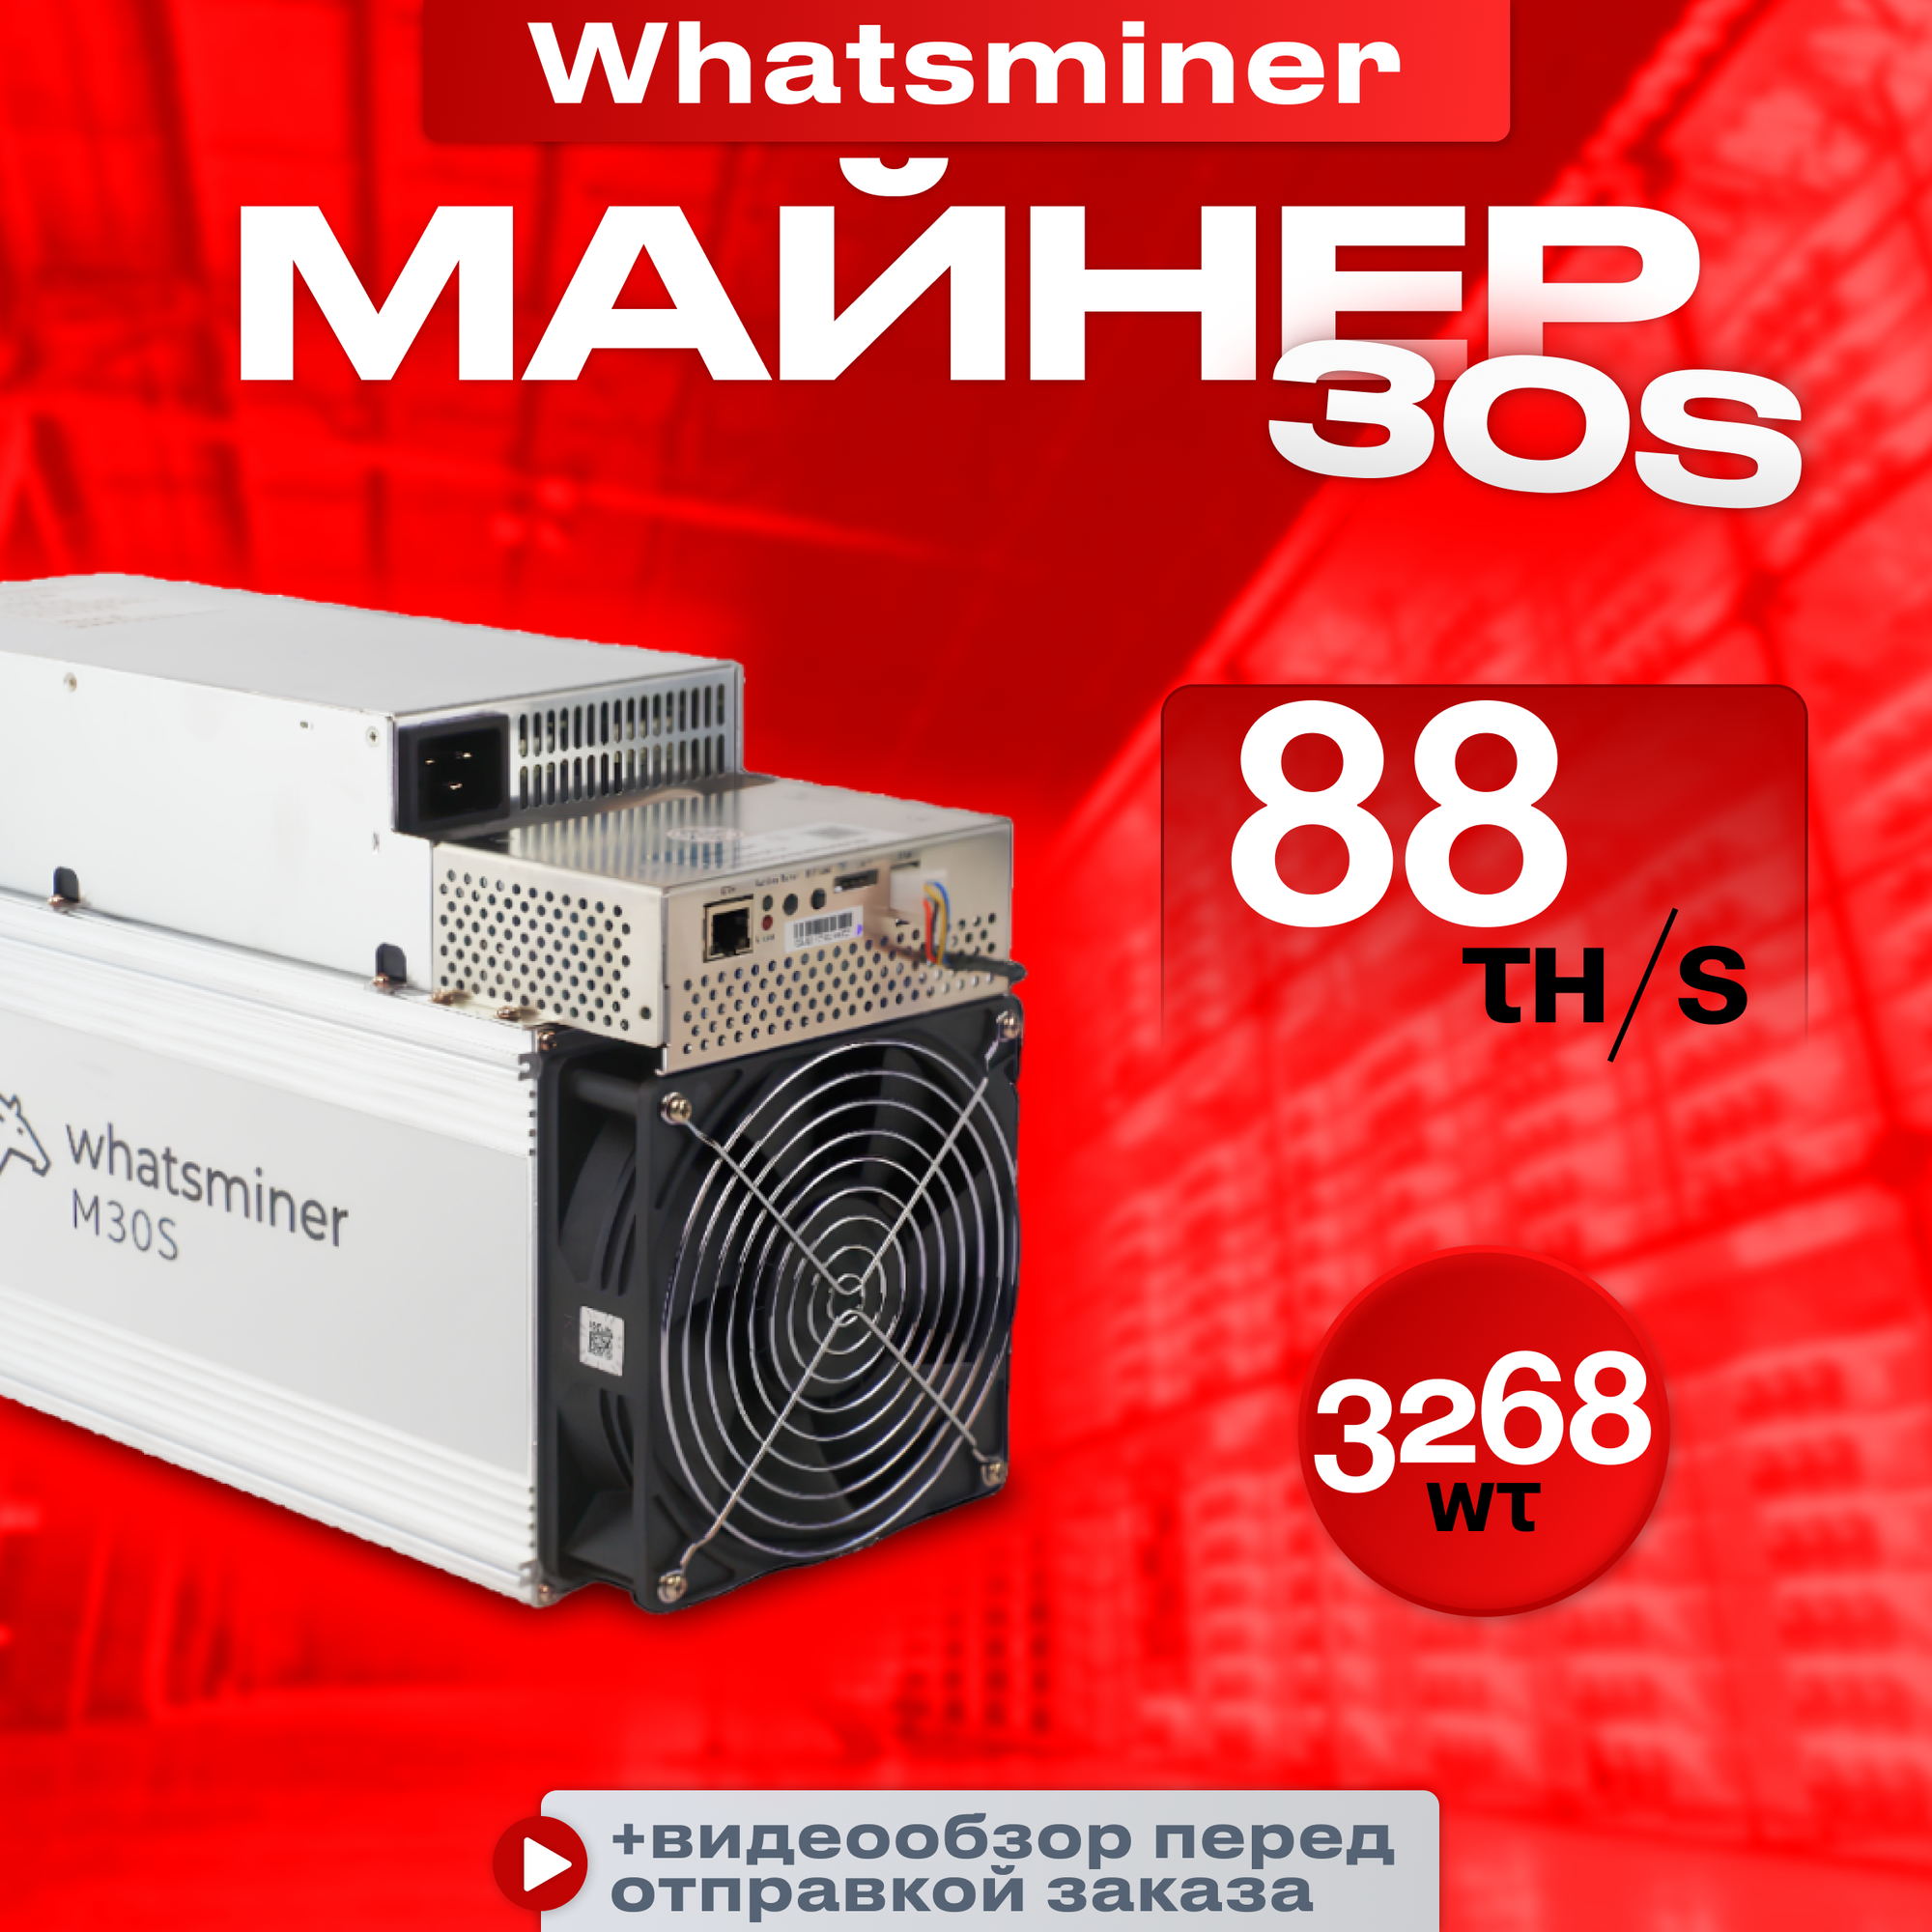 Асик майнер Whatsminer M30S 88 Th/s новый на гарантии